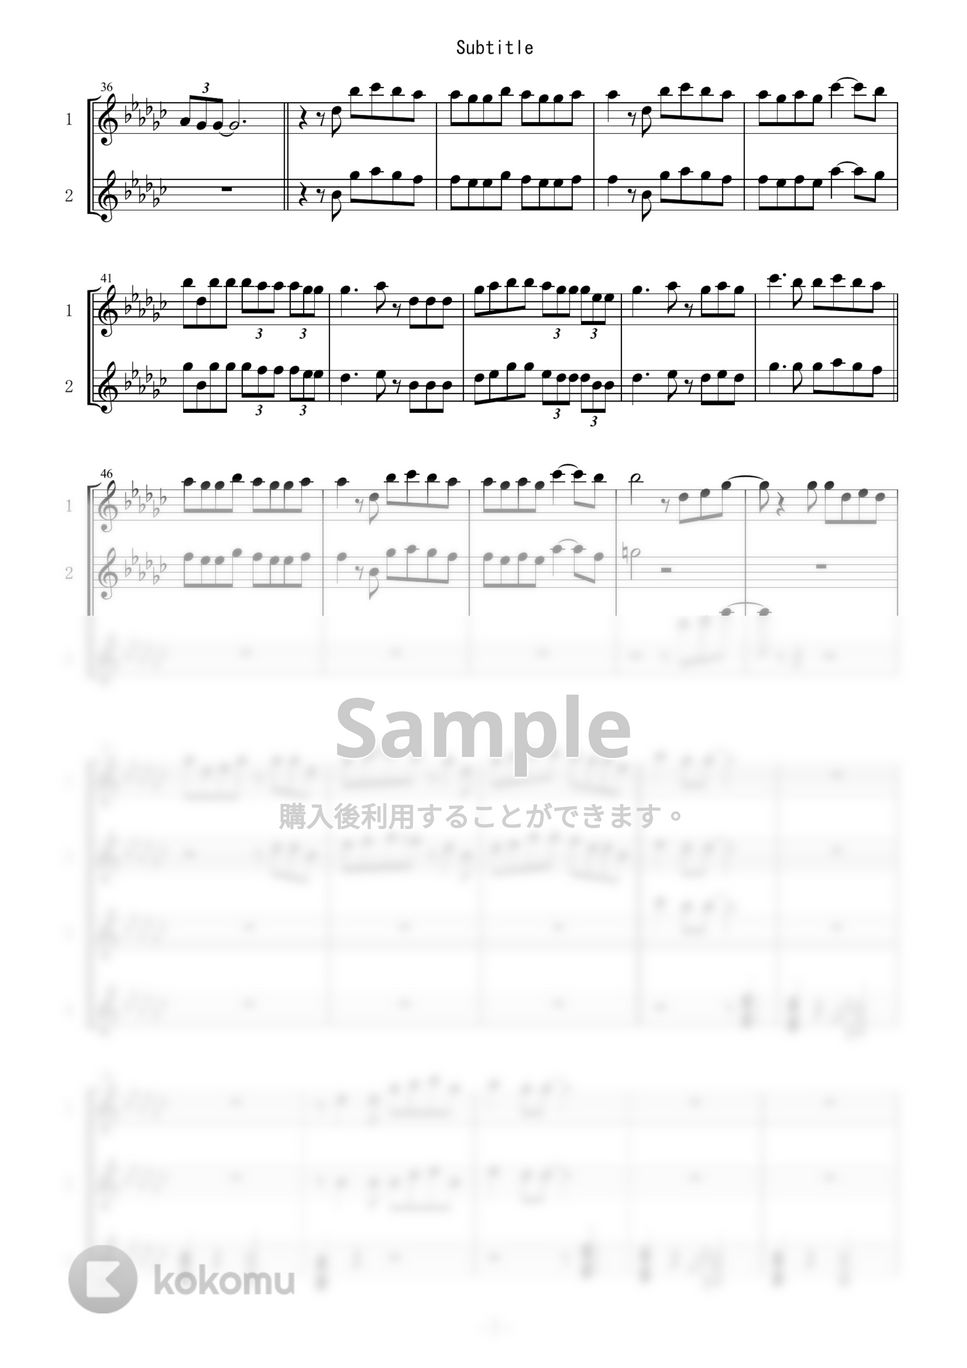 Official髭男dism - Subtitle (in C / 原曲キー/ハモリ有り/フルート/オーボエ/silent) by enorisa